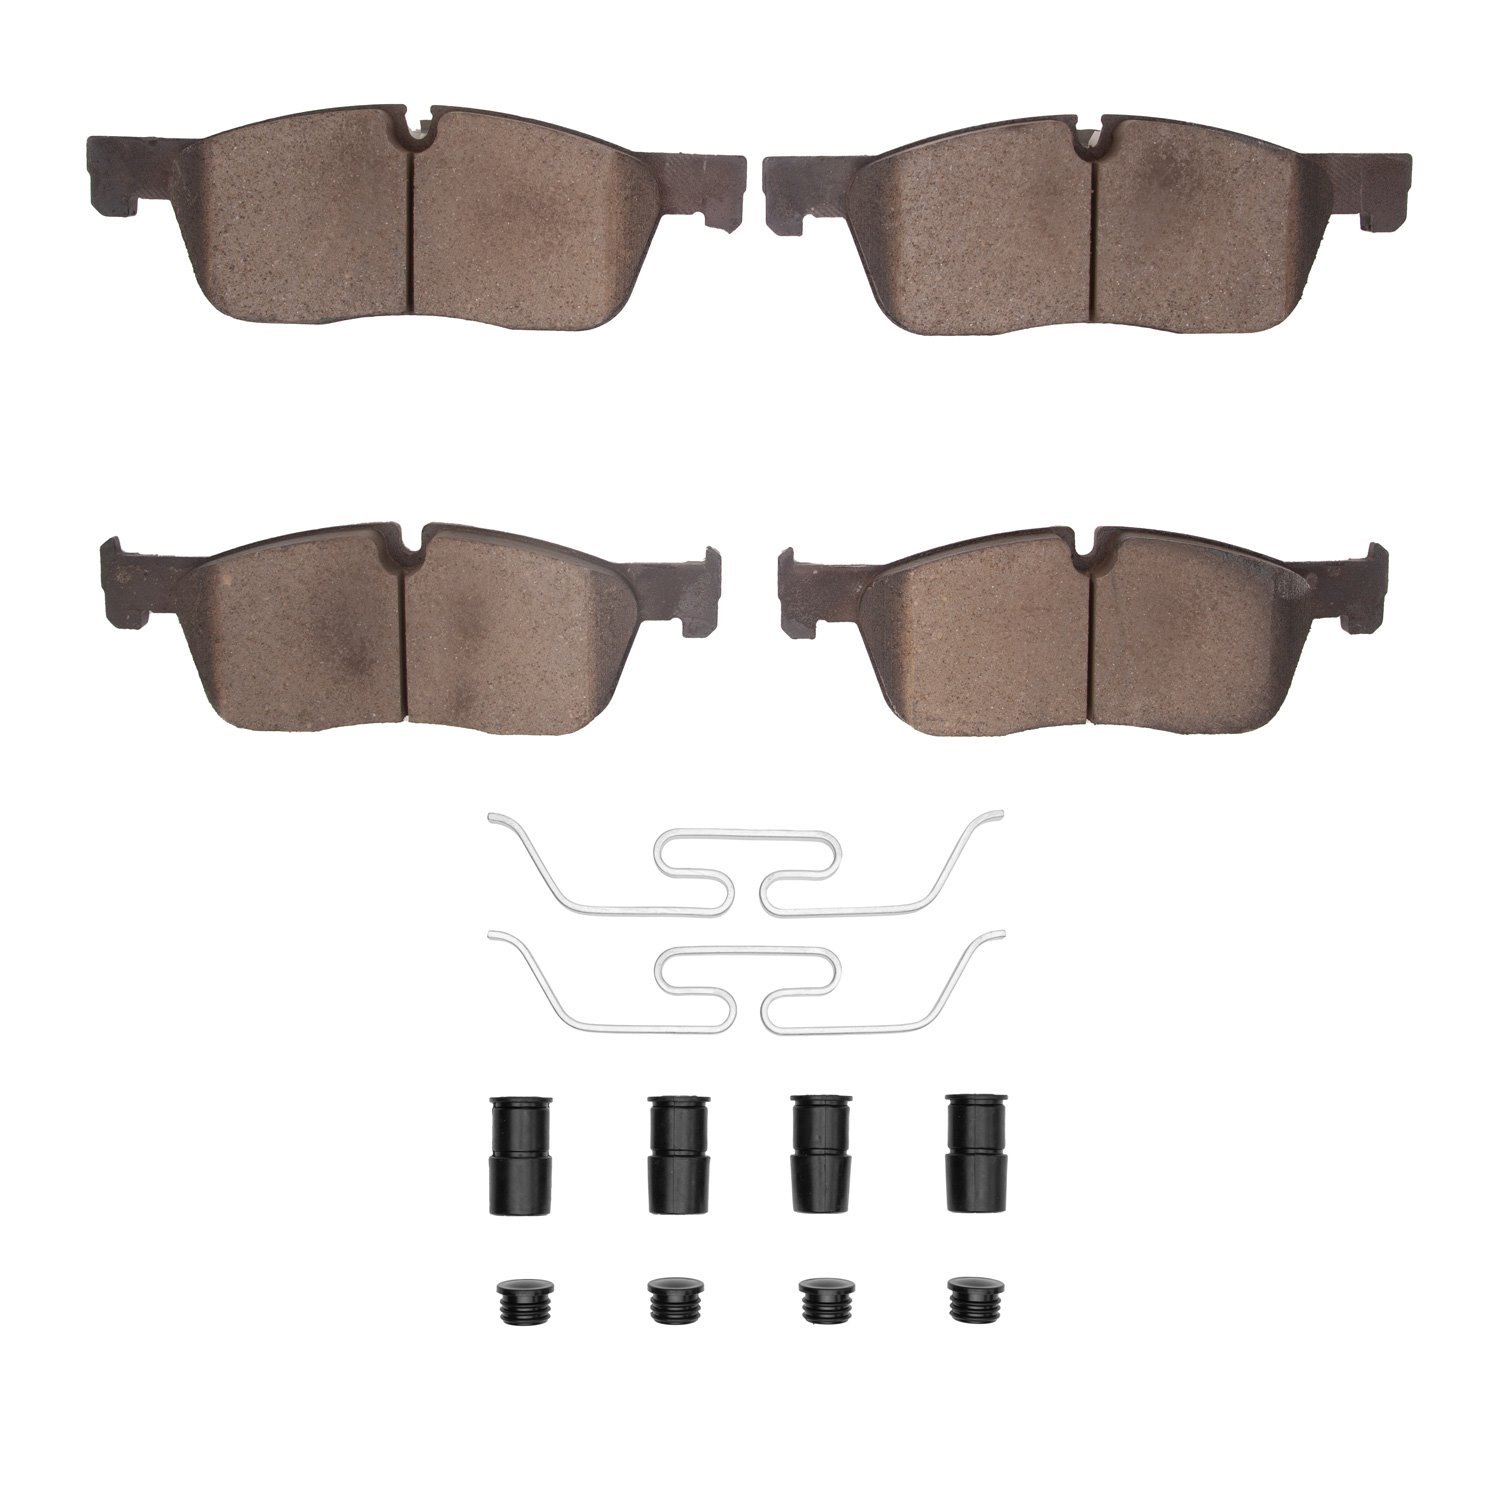 1310-1838-01 3000-Series Ceramic Brake Pads & Hardware Kit, 2015-2019 Multiple Makes/Models, Position: Front